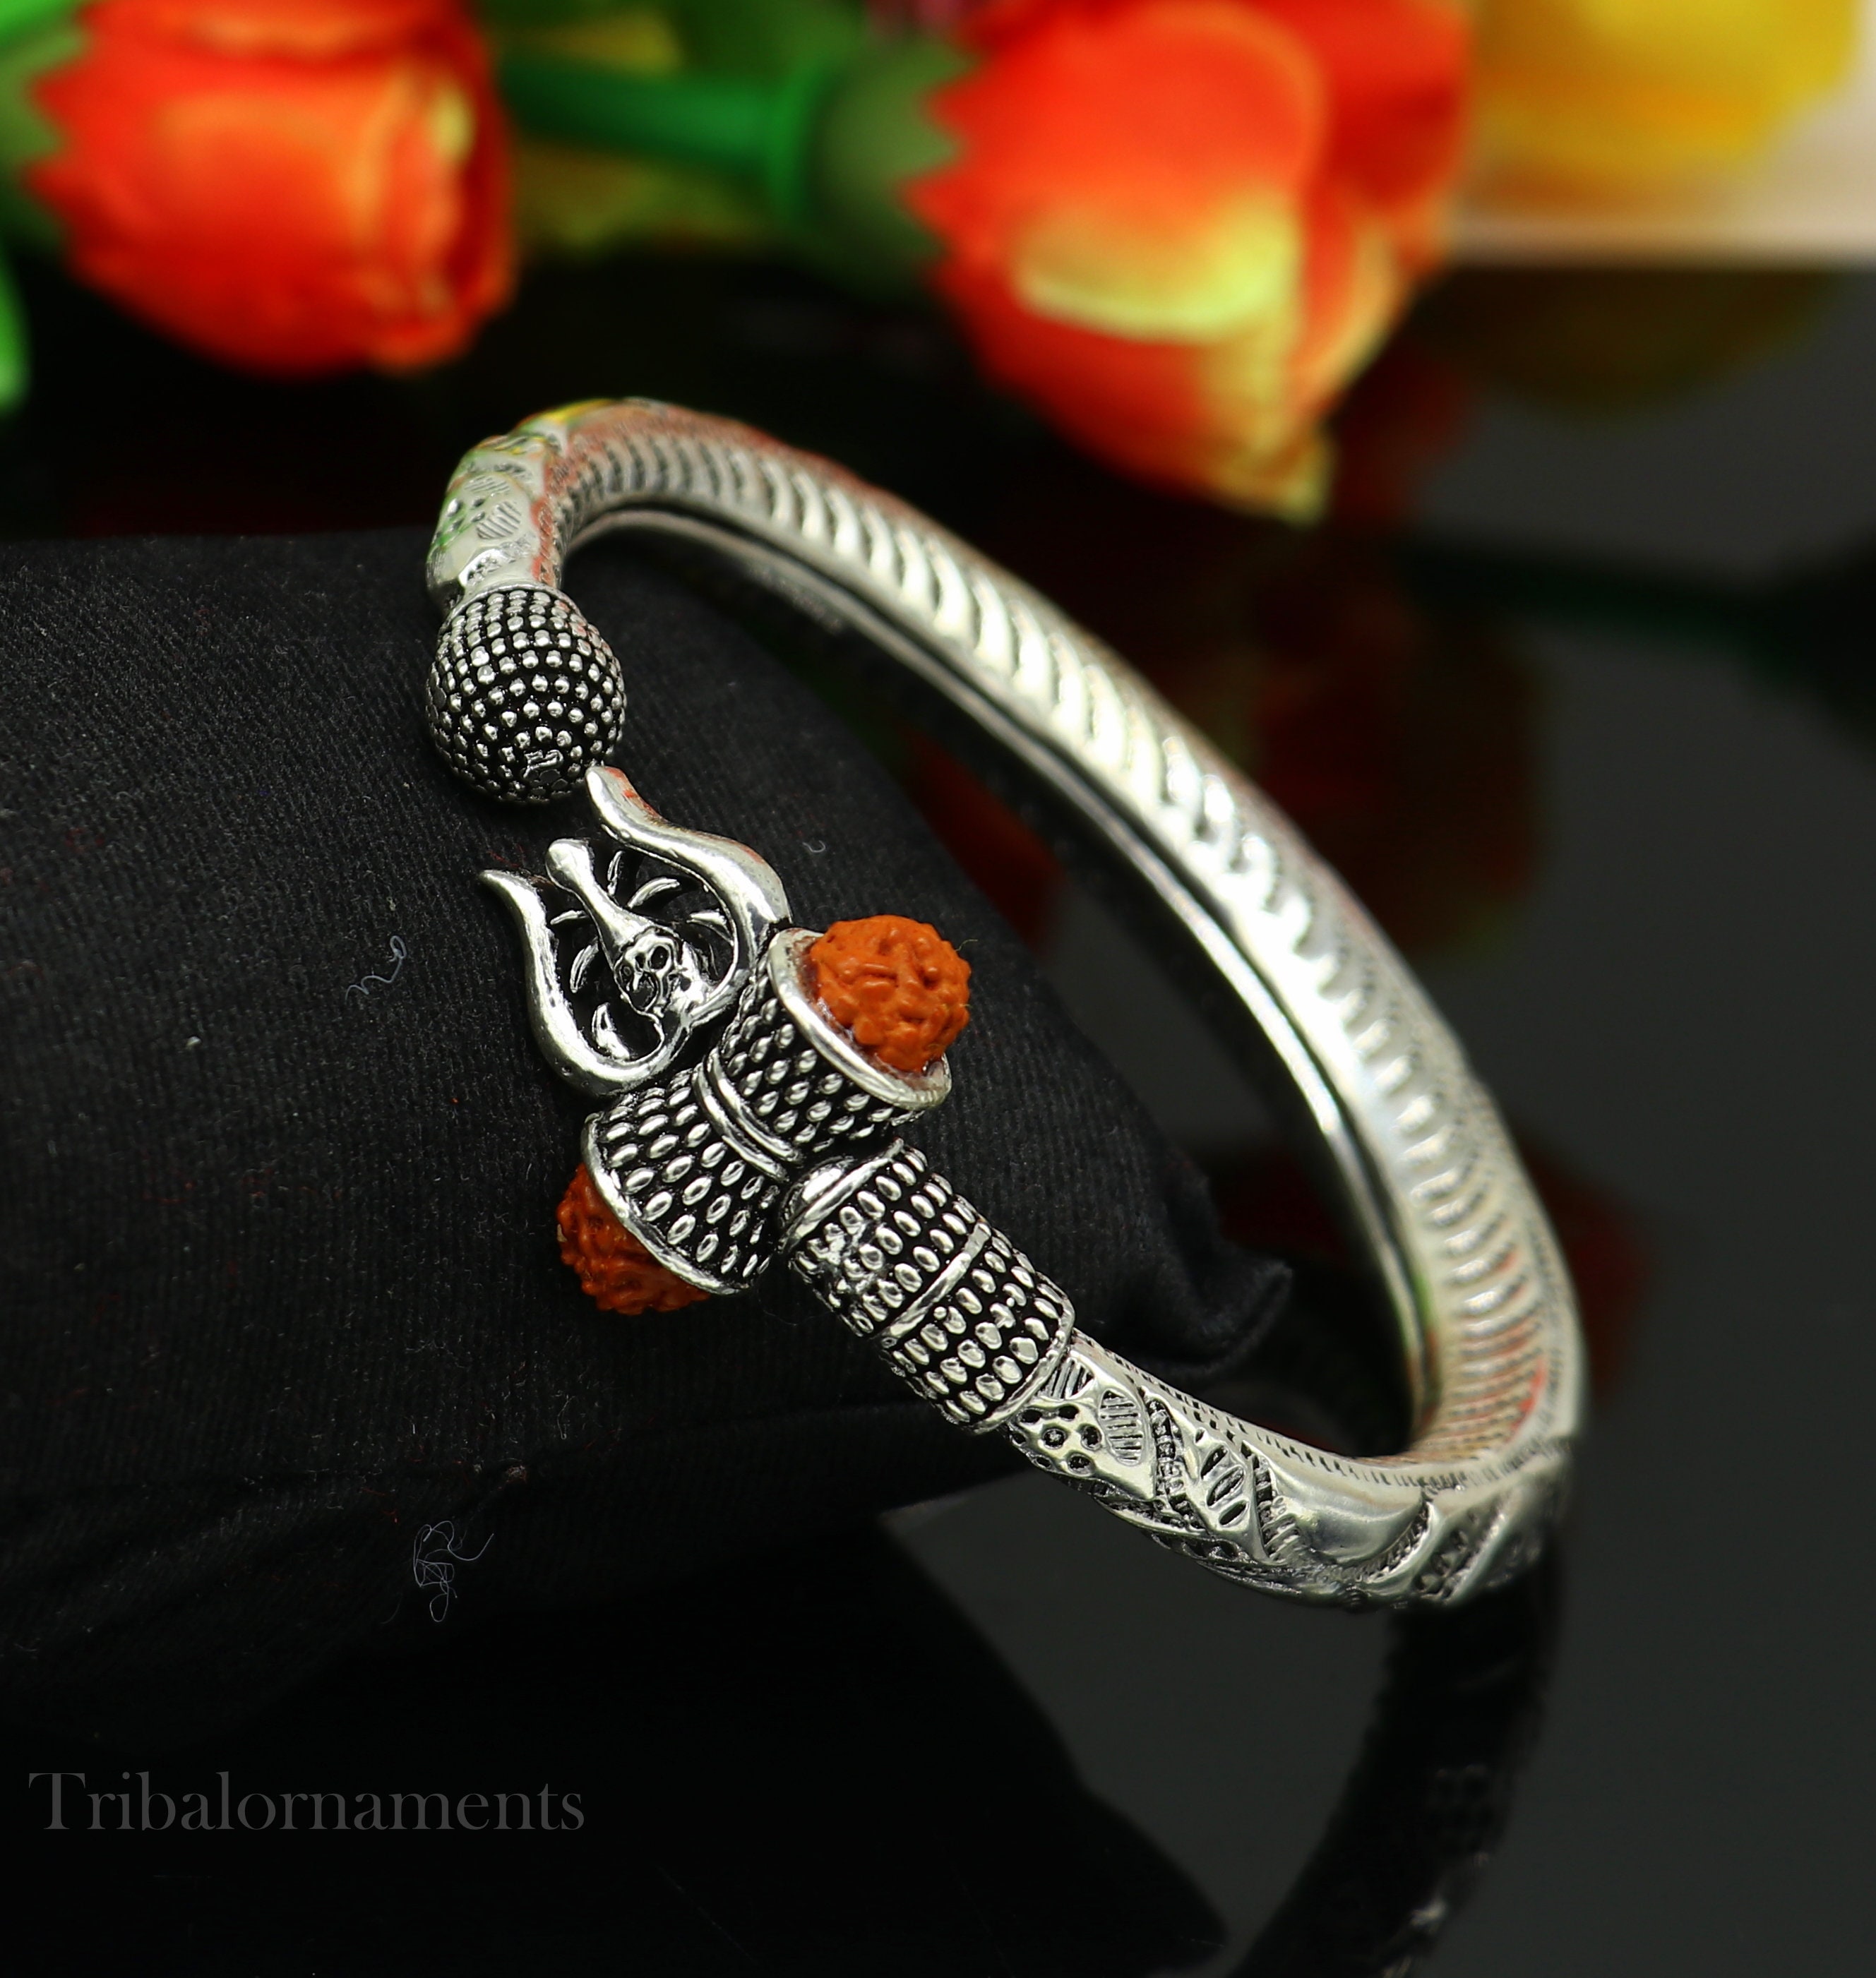 Buy Shiva Trishul Rudraksha Bracelet Online In India At Discounted Prices